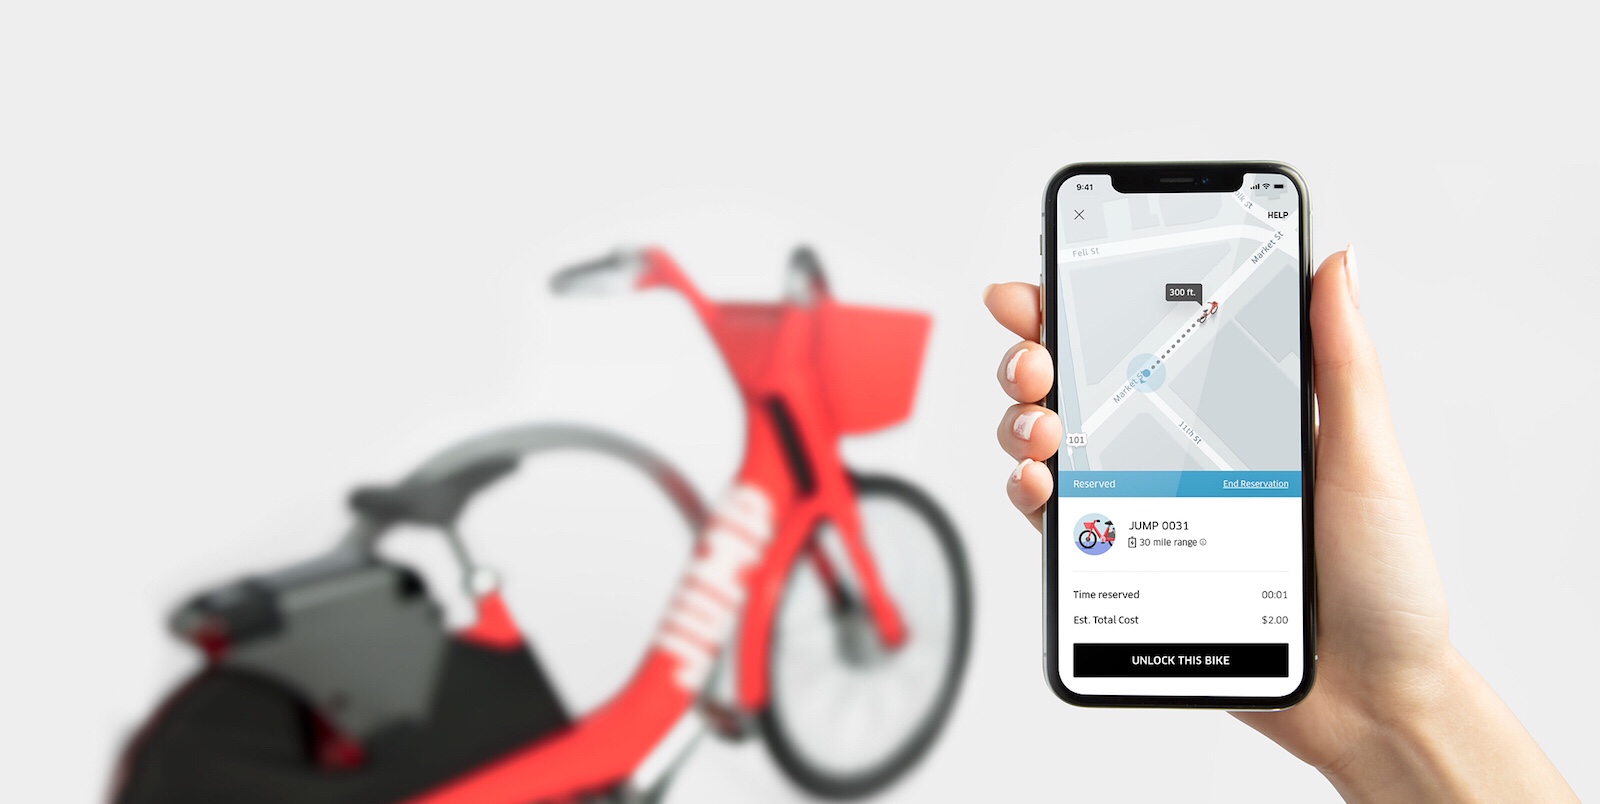 Uber has acquired San Francisco bike-sharing service Jump